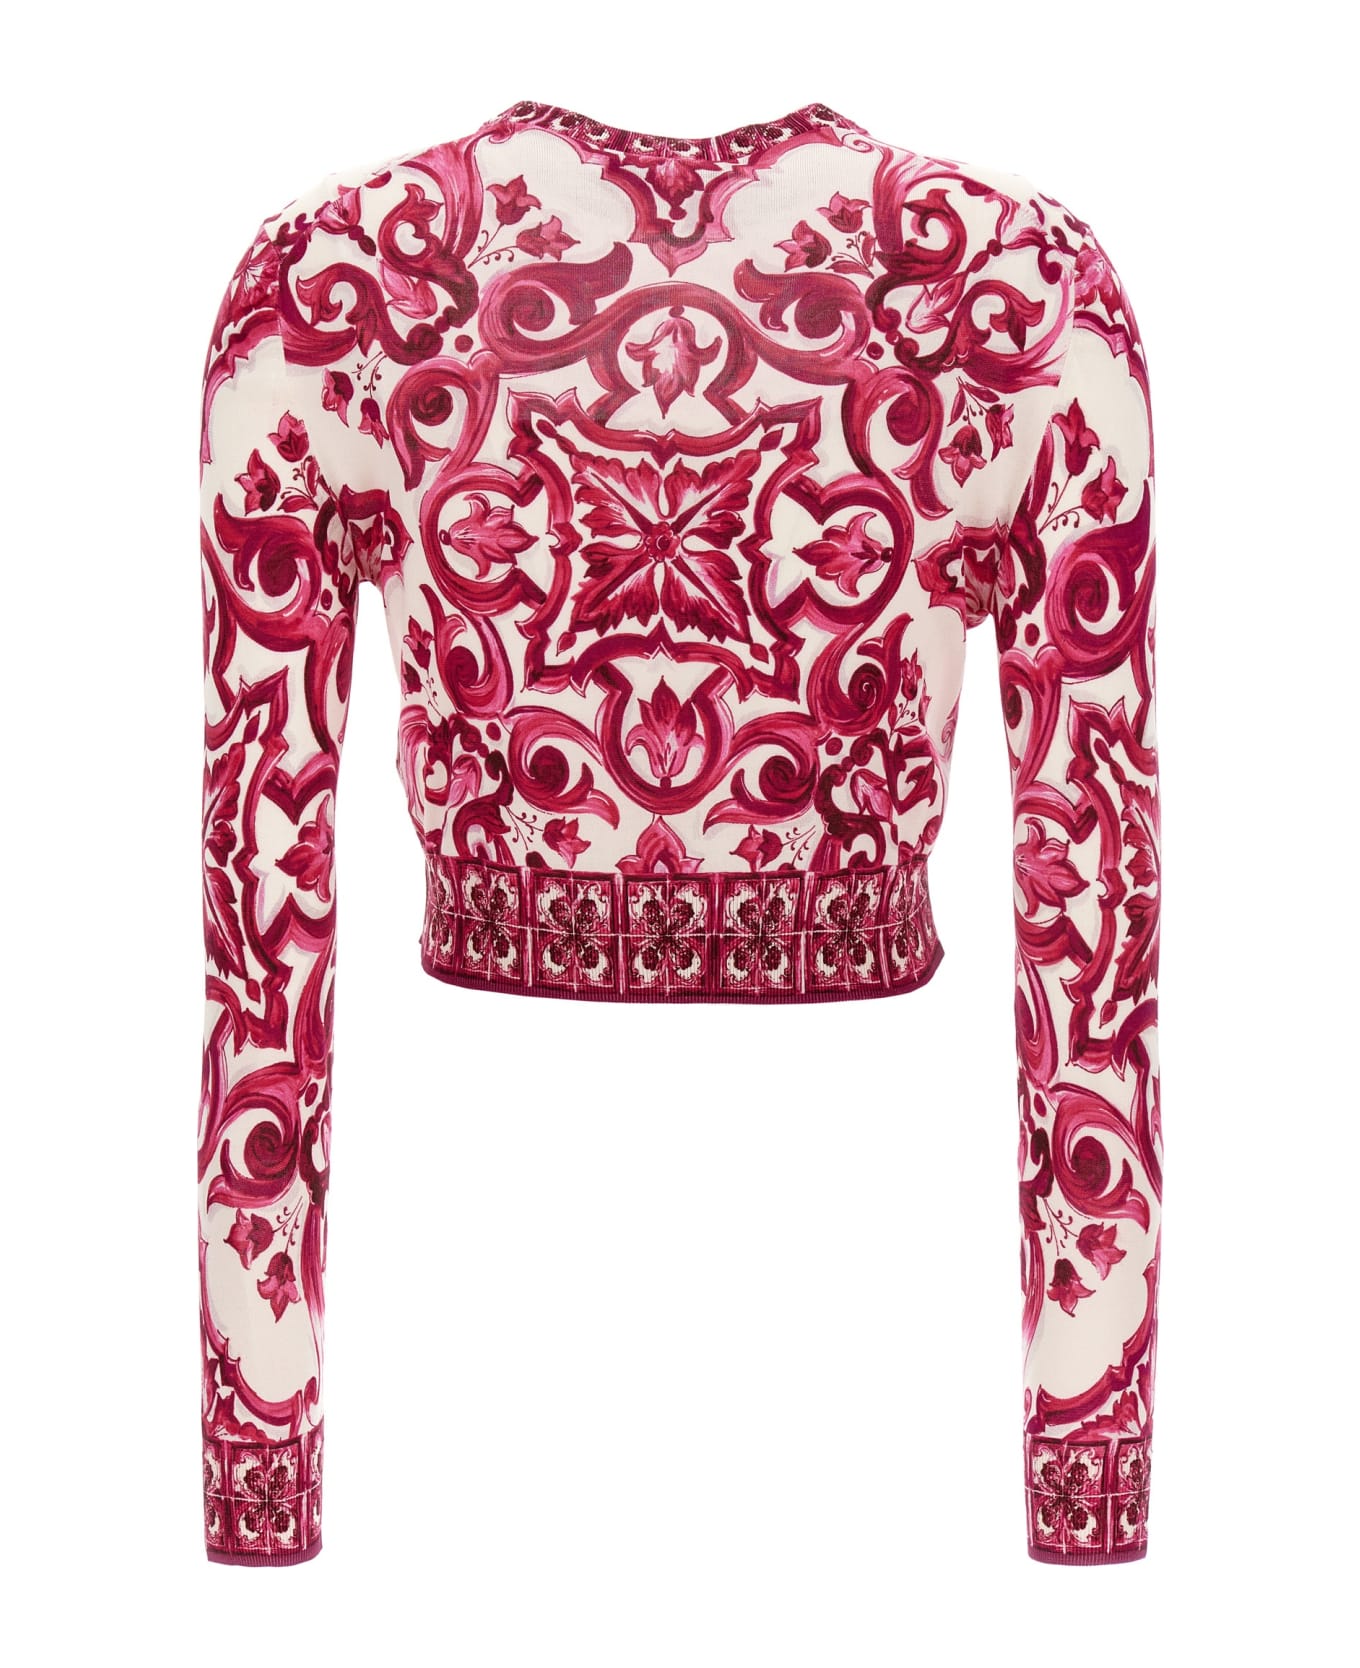 Dolce & Gabbana Maiolica Sweater - Pink ニットウェア